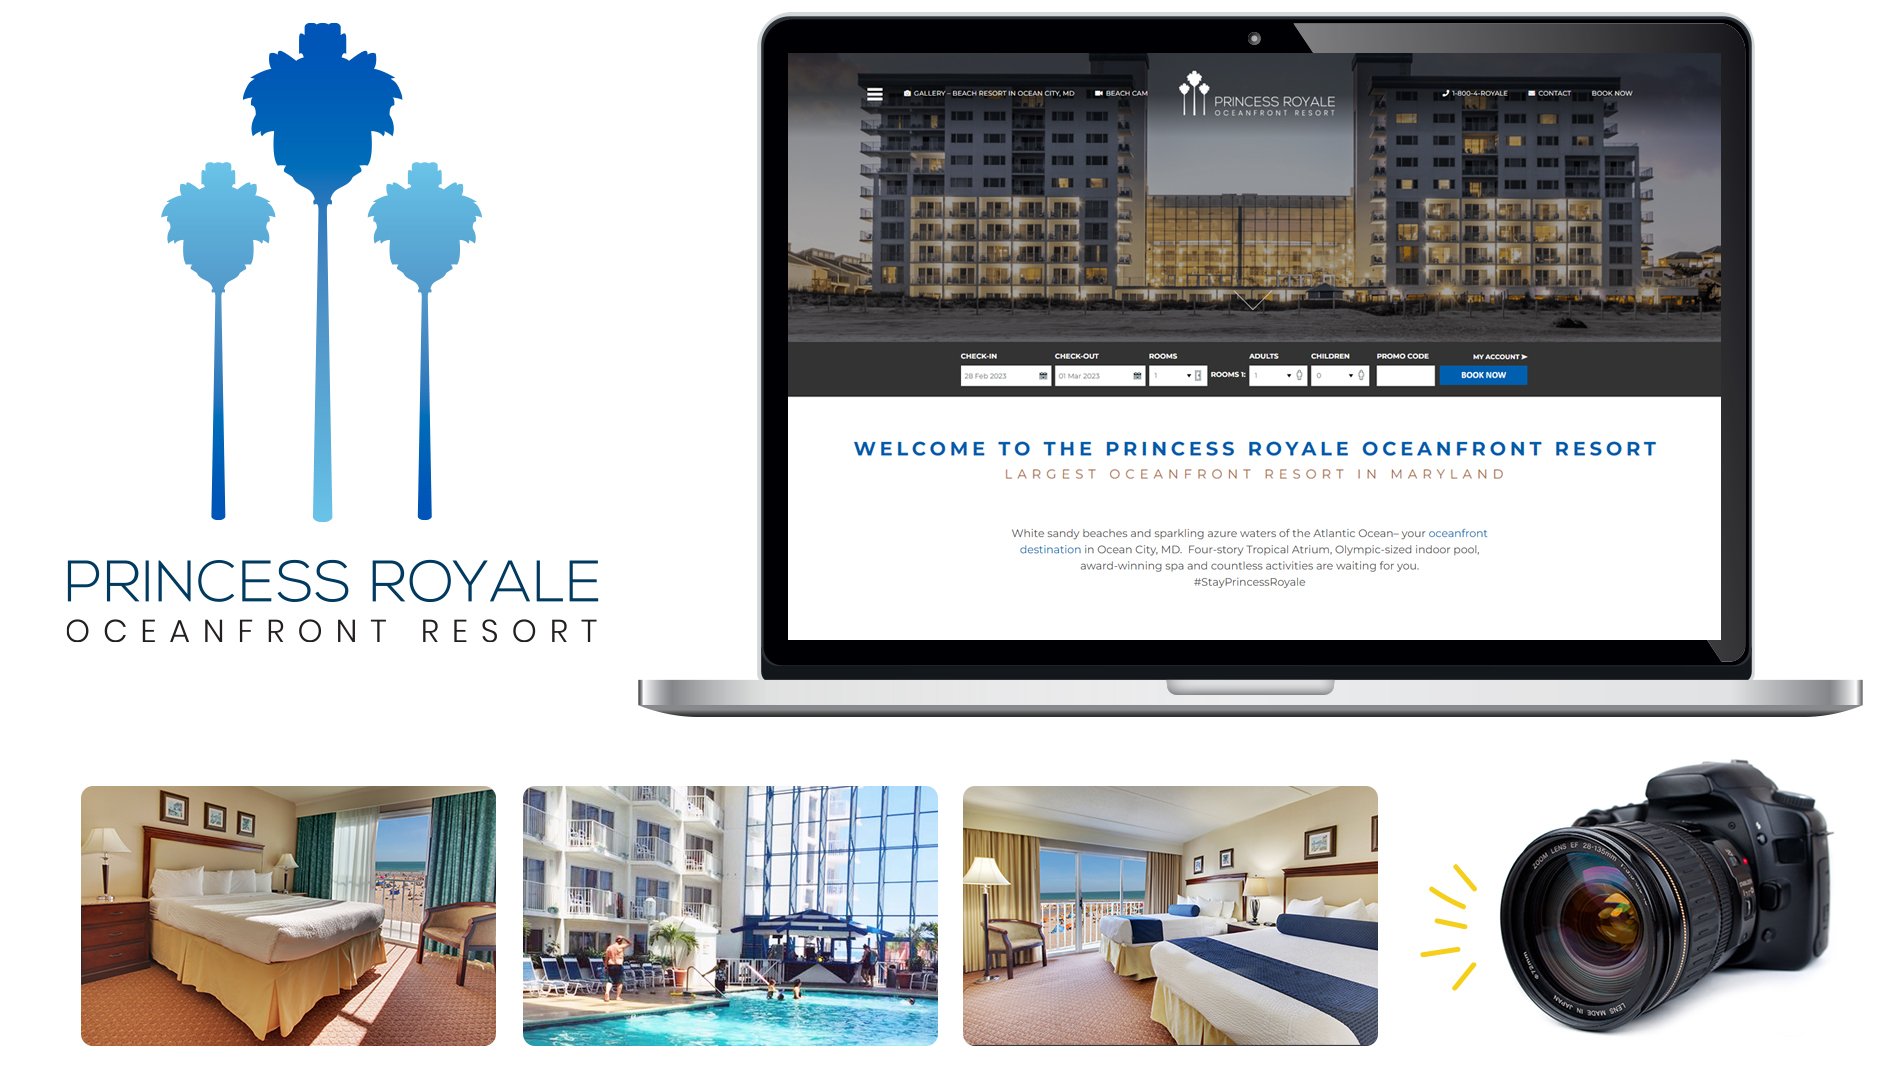 Princess Royale Oceanfront Resort homepage